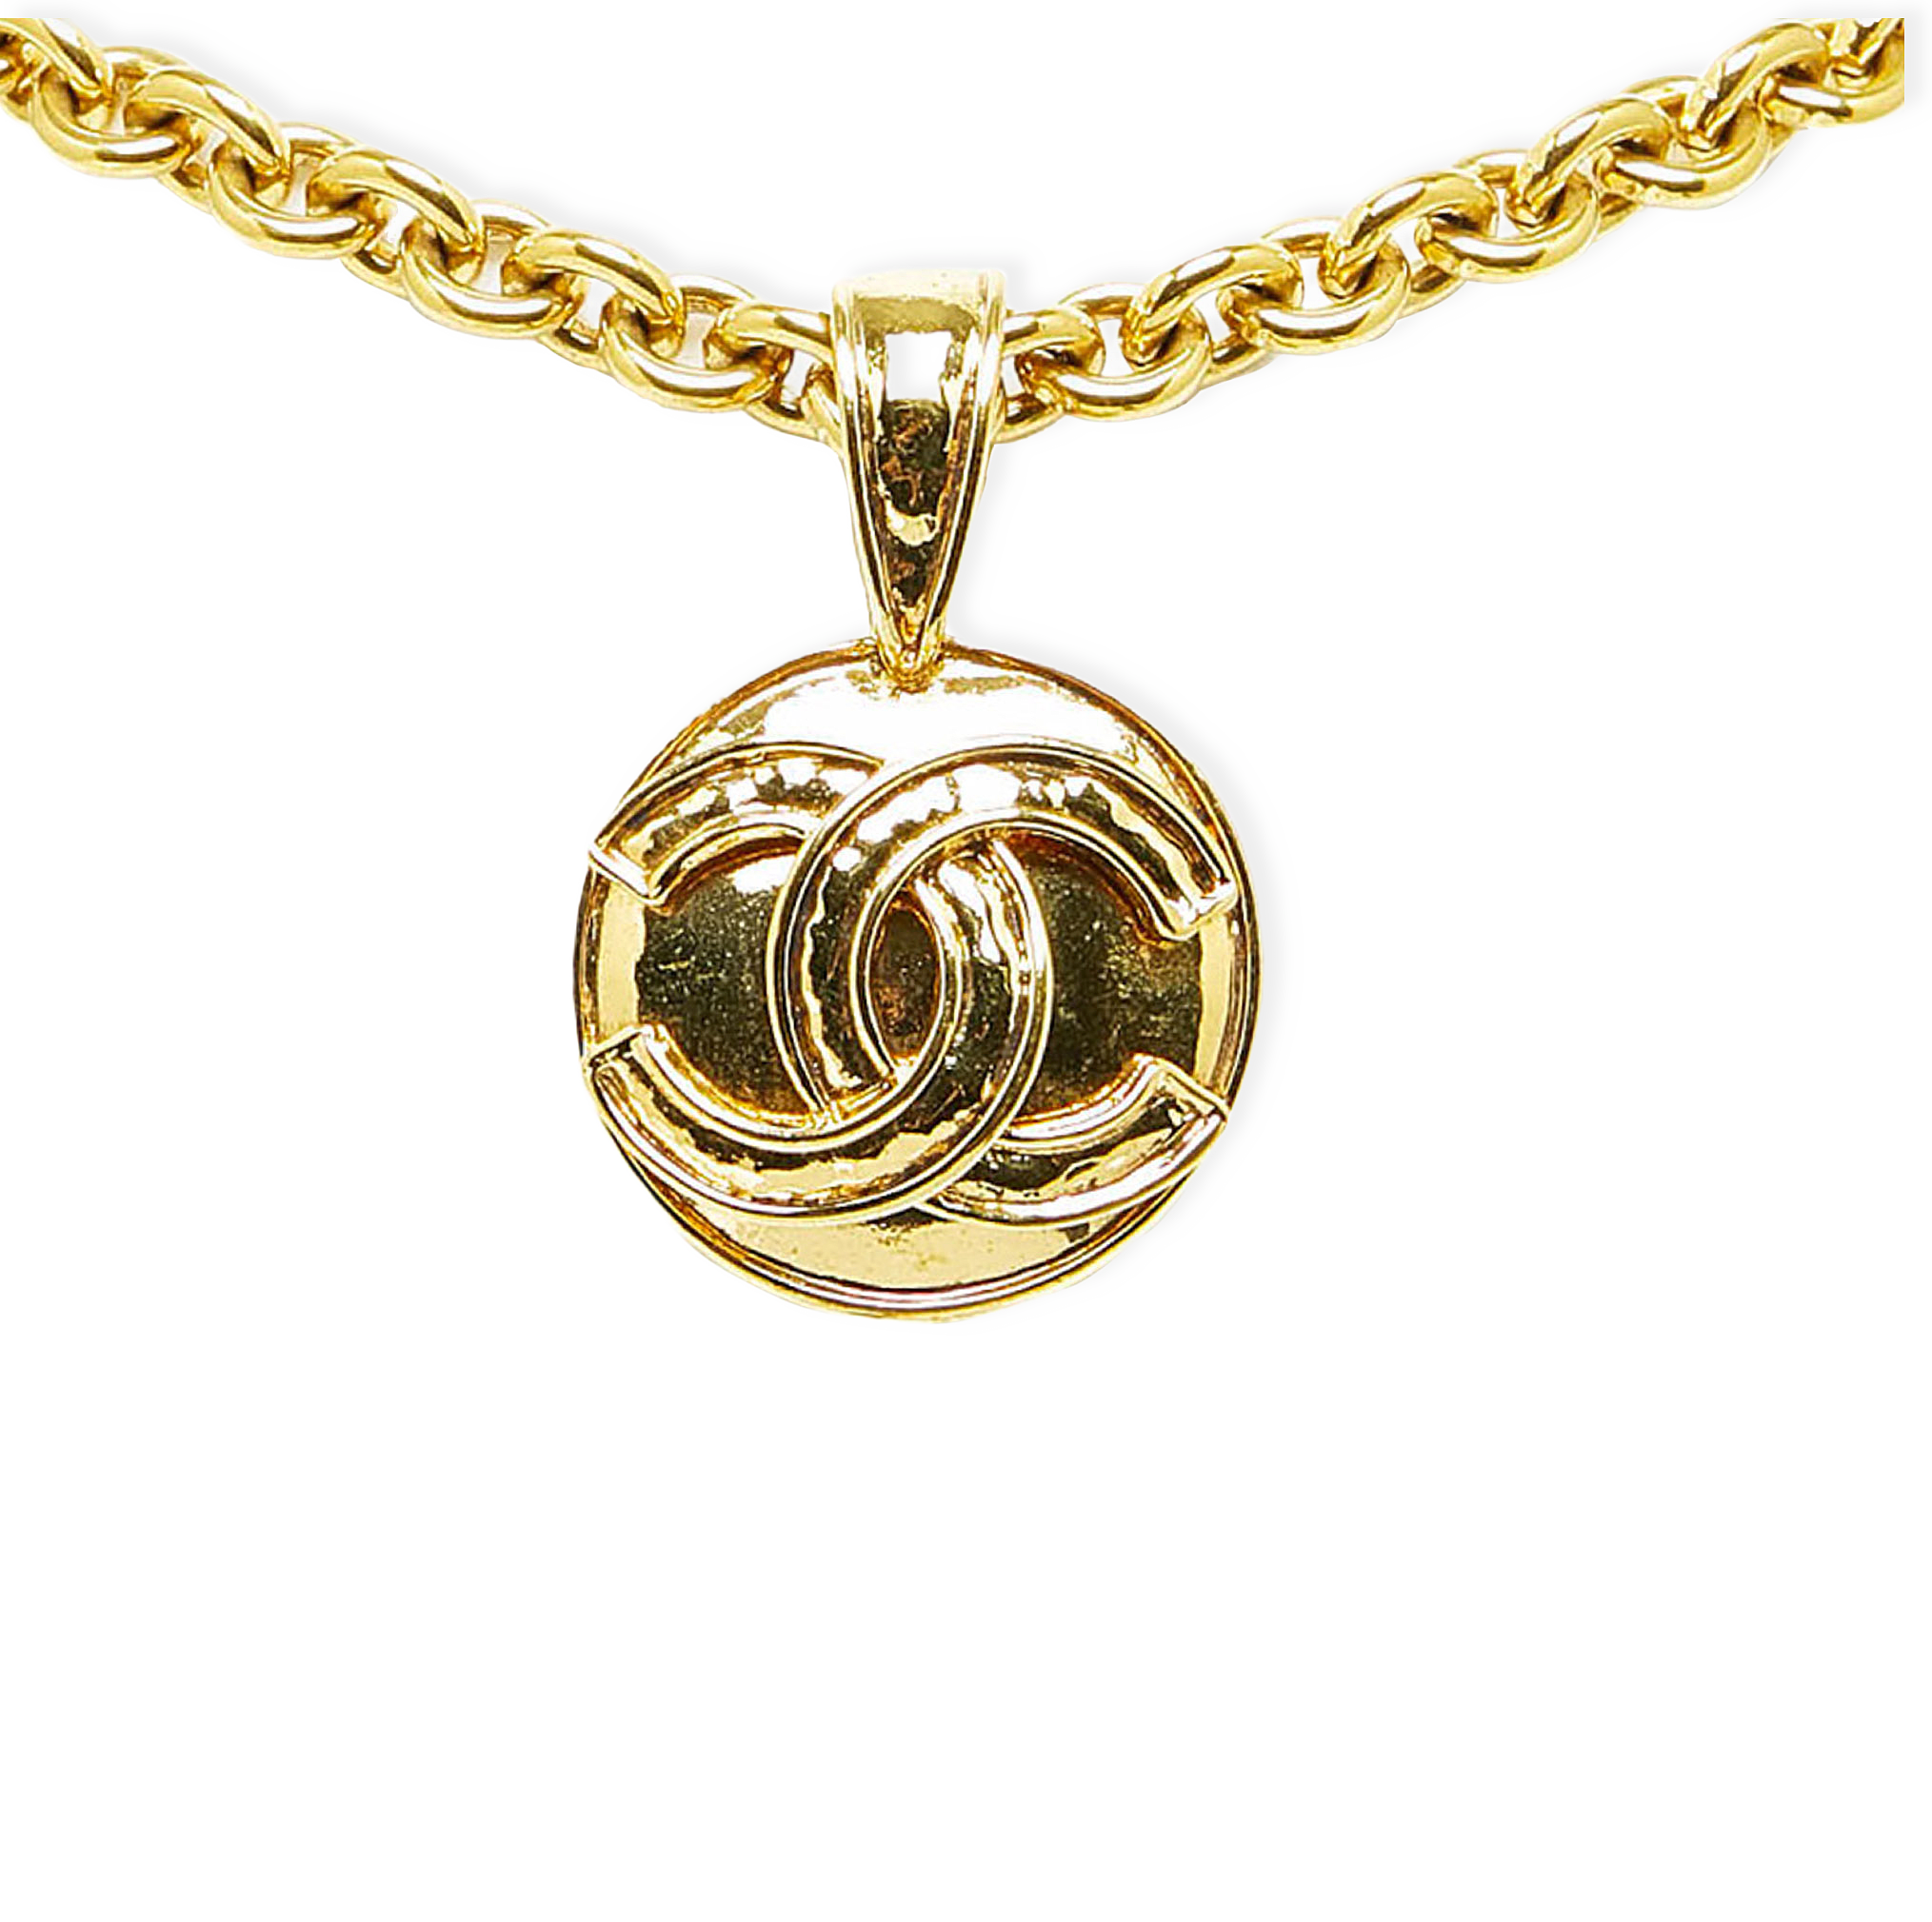 Chanel Cd Pendant Necklace från Luxclusif